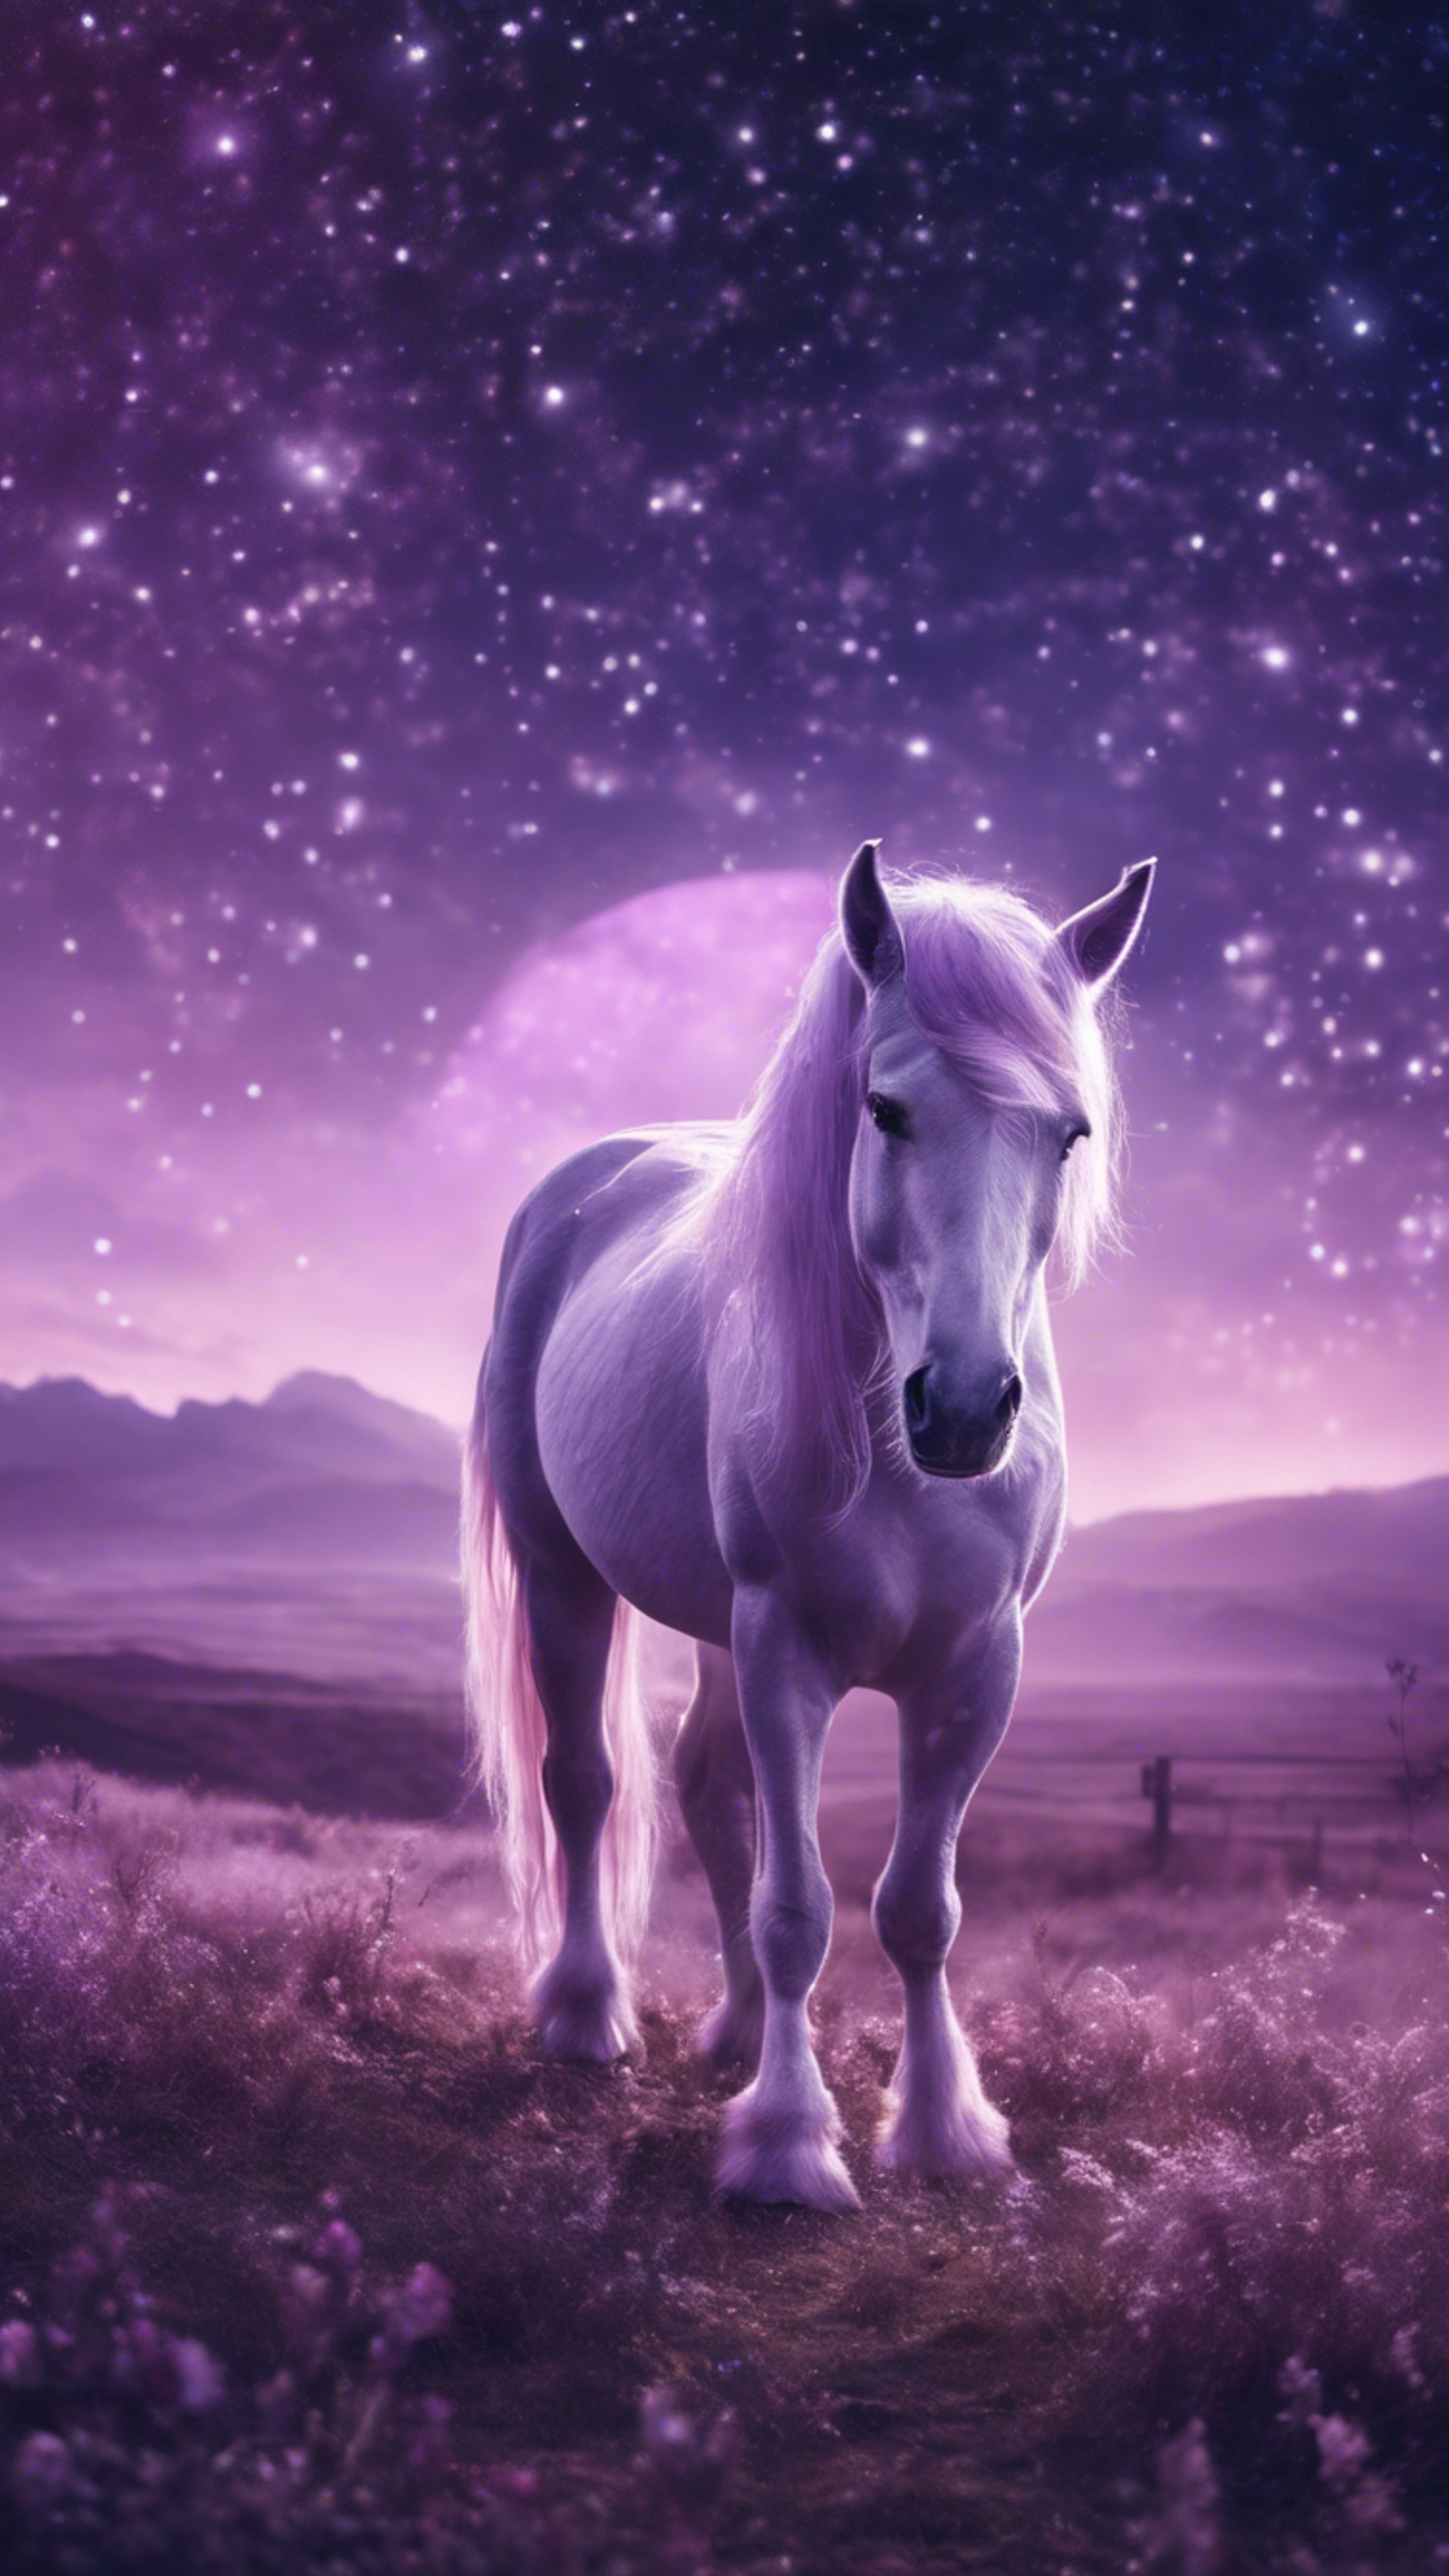 A light purple unicorn grazing in a mystical landscape under the starry night. Wallpaper[ebdebf087ad14a189ba8]